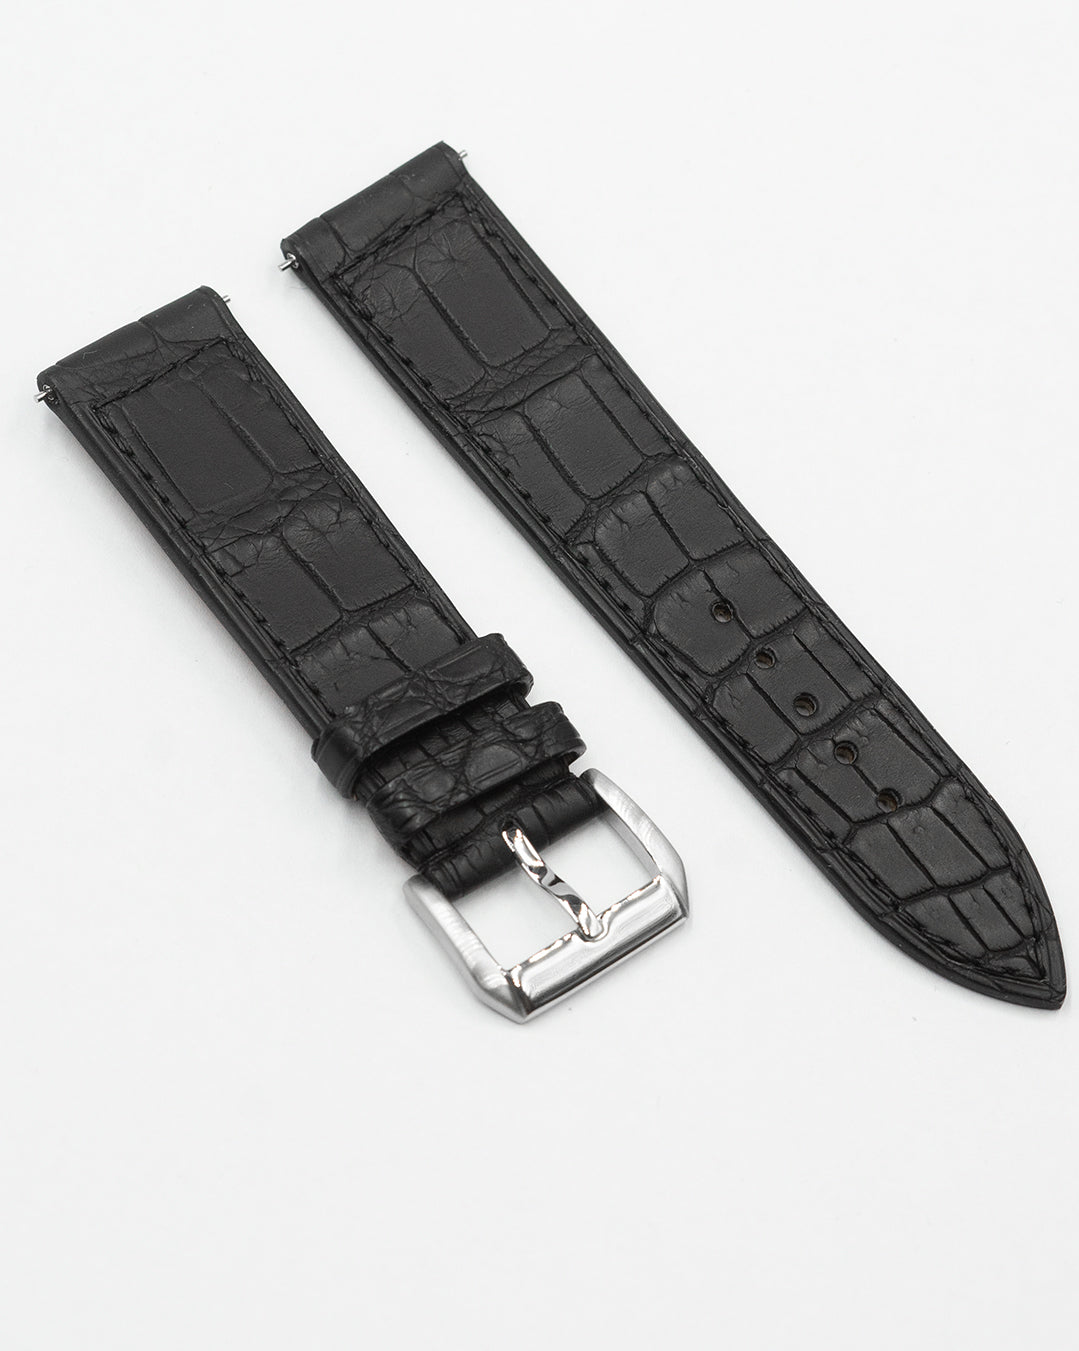 (20mm) Alligator Leather - Black, Pilot style